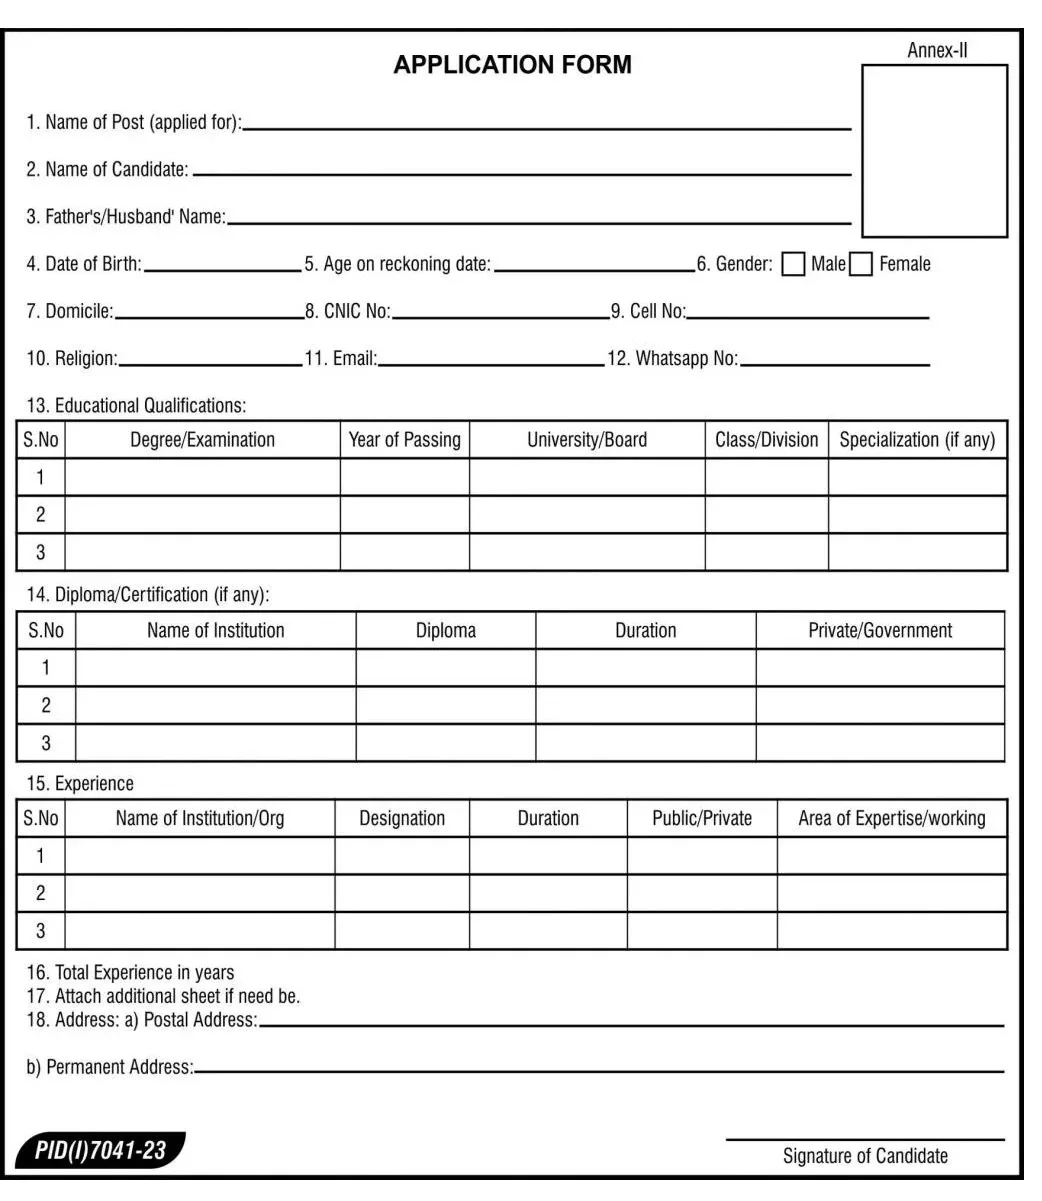 Application form of Public Sector Organization Jobs 2024 PO Box No. 551